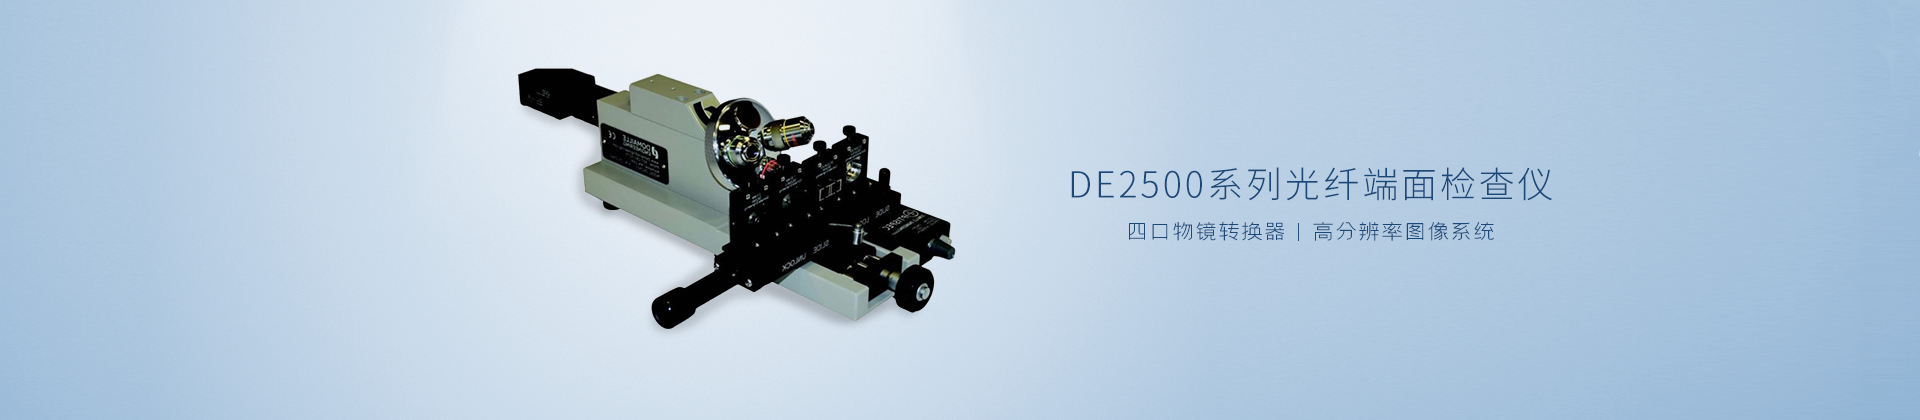 DE2500系列光纤端面检查仪